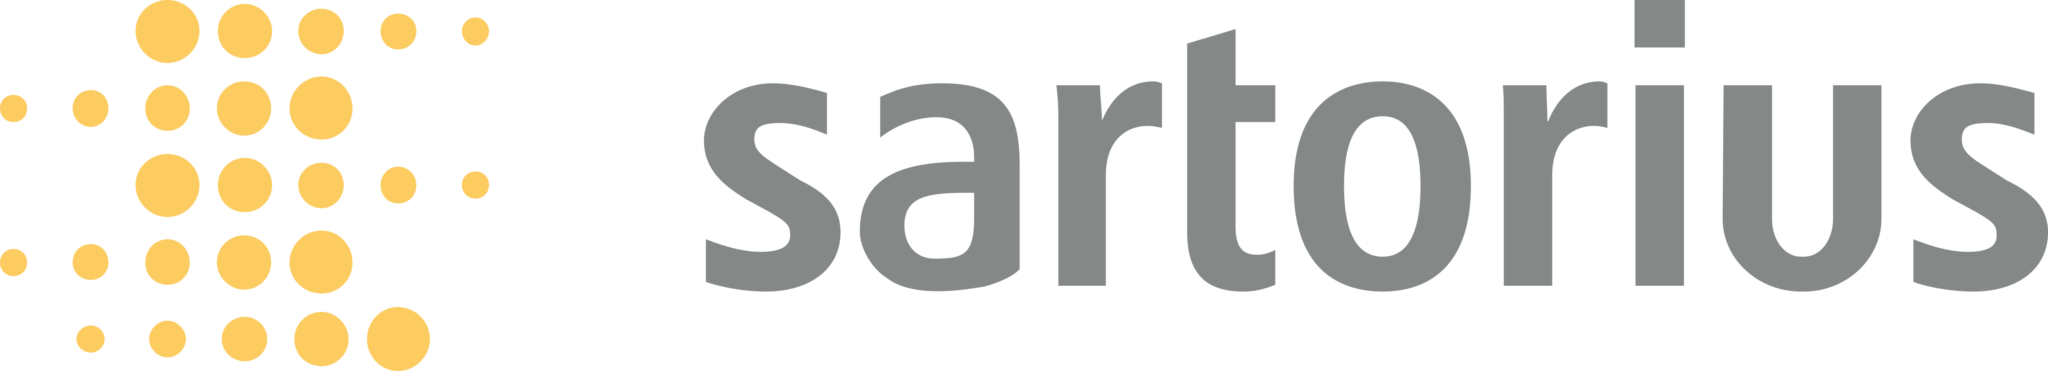 sartorius software download